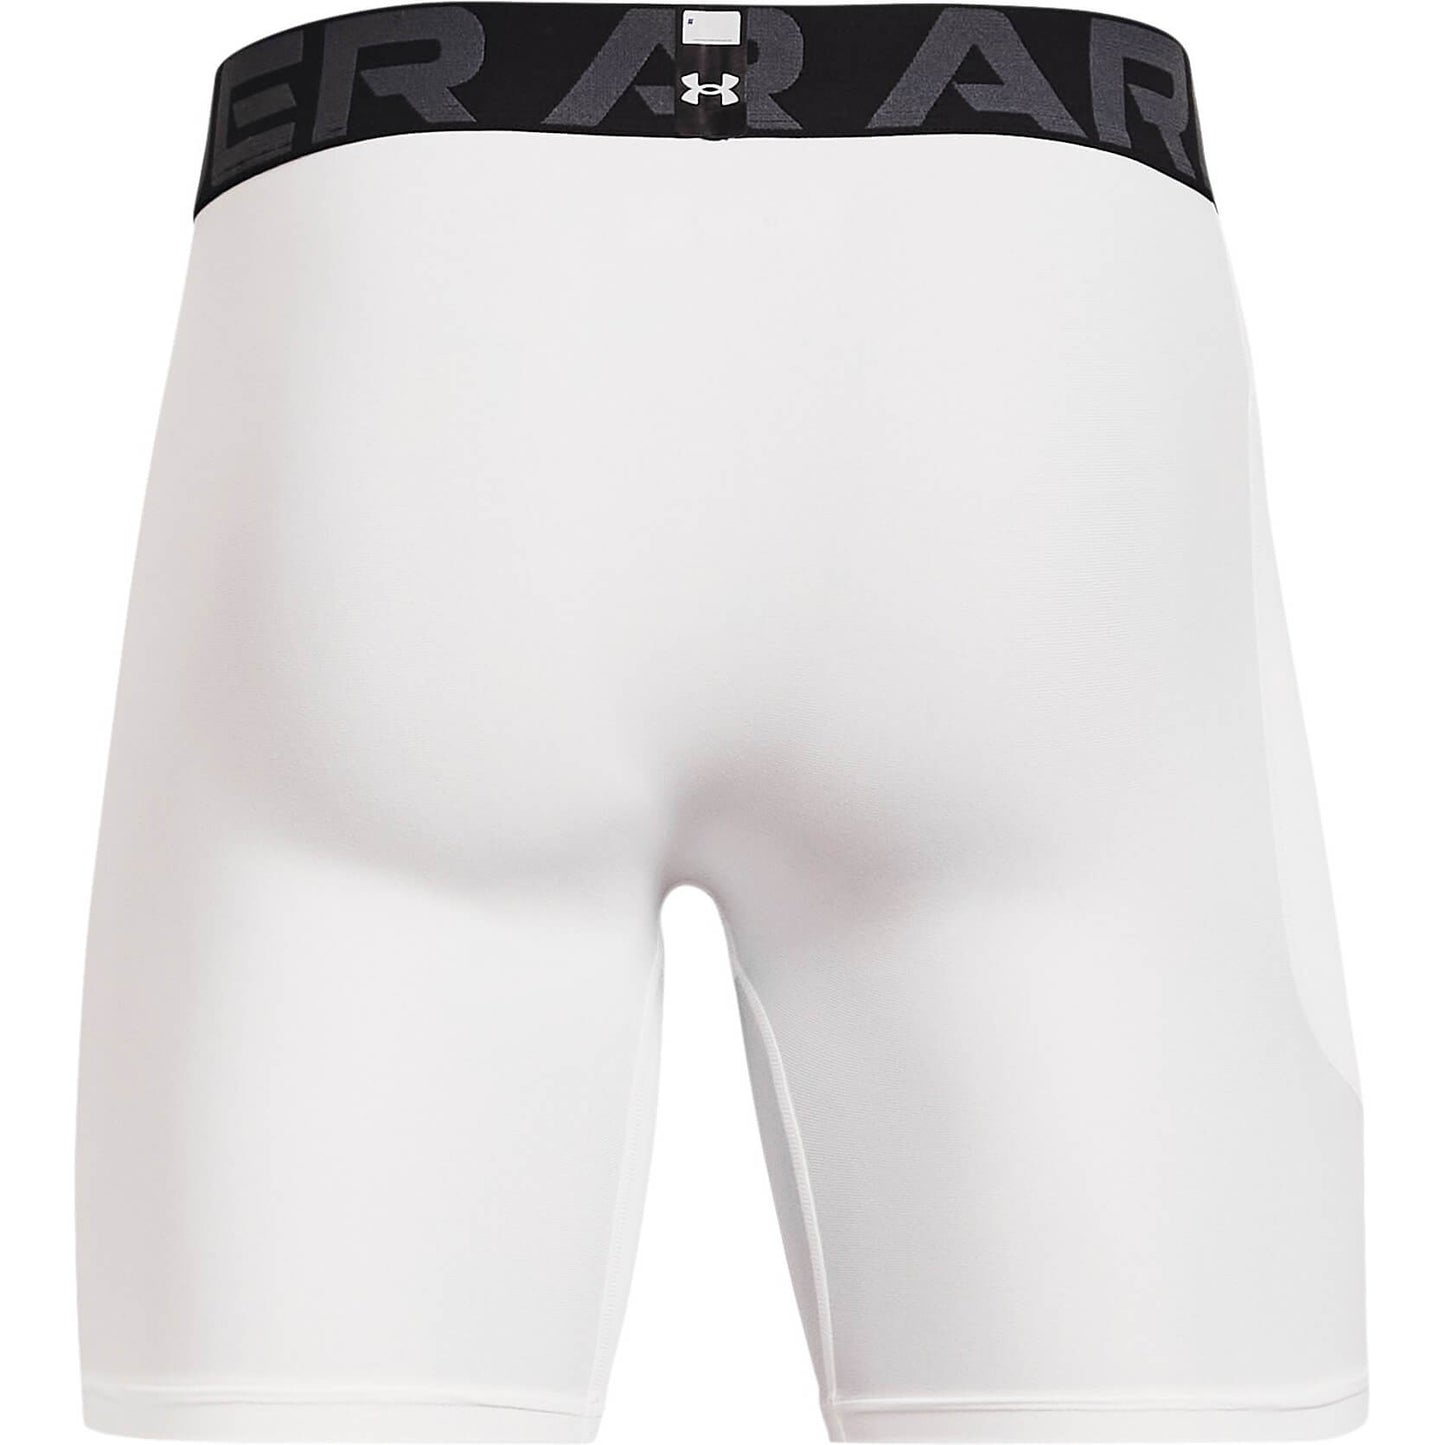 Under Armour Men's HeatGear® Armour Compression Shorts White / Black